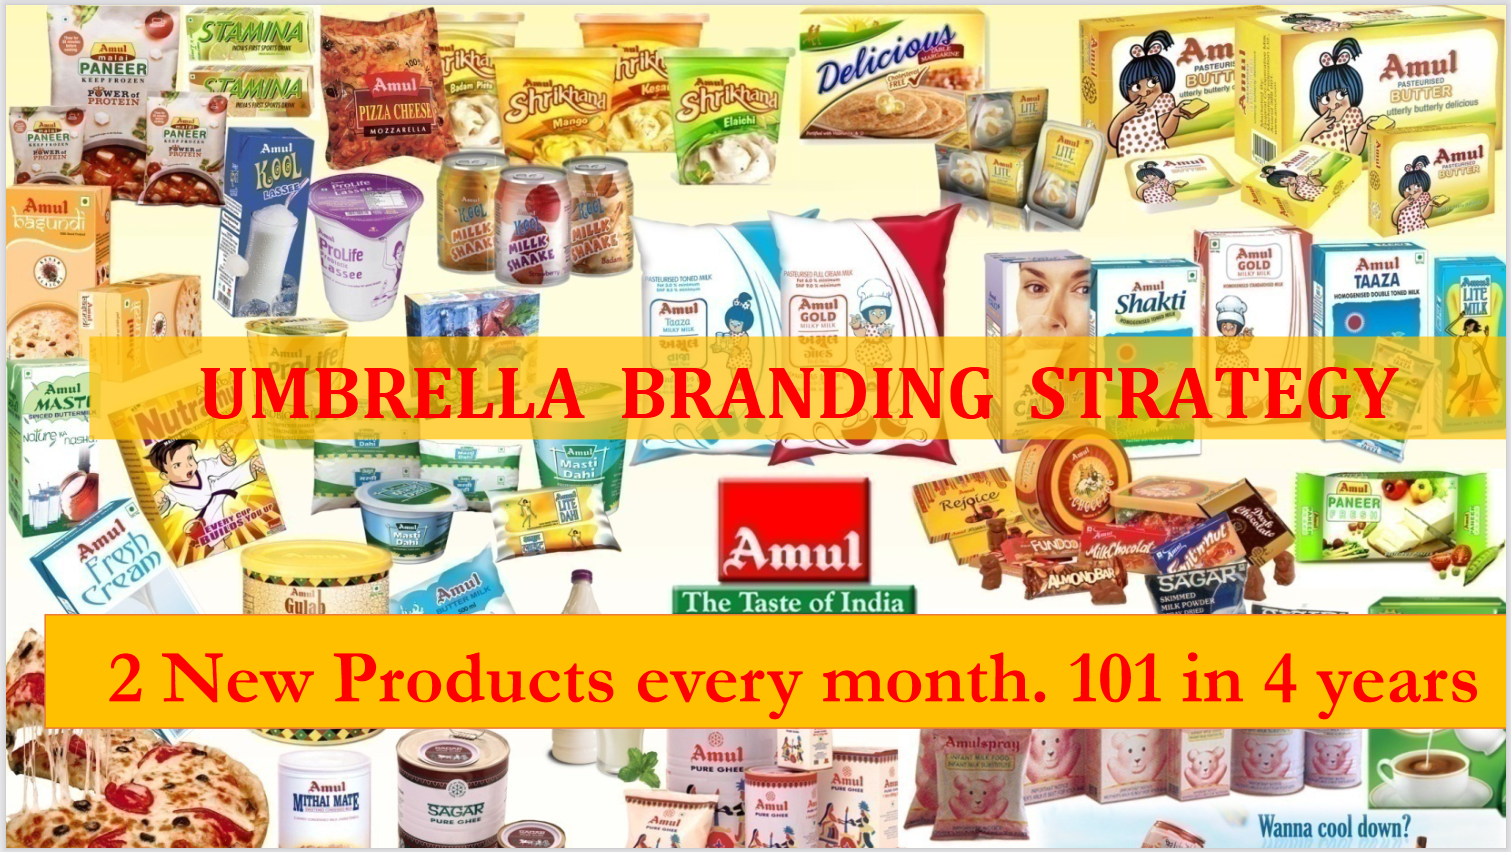 Amul's Umbrella Branding Strategy